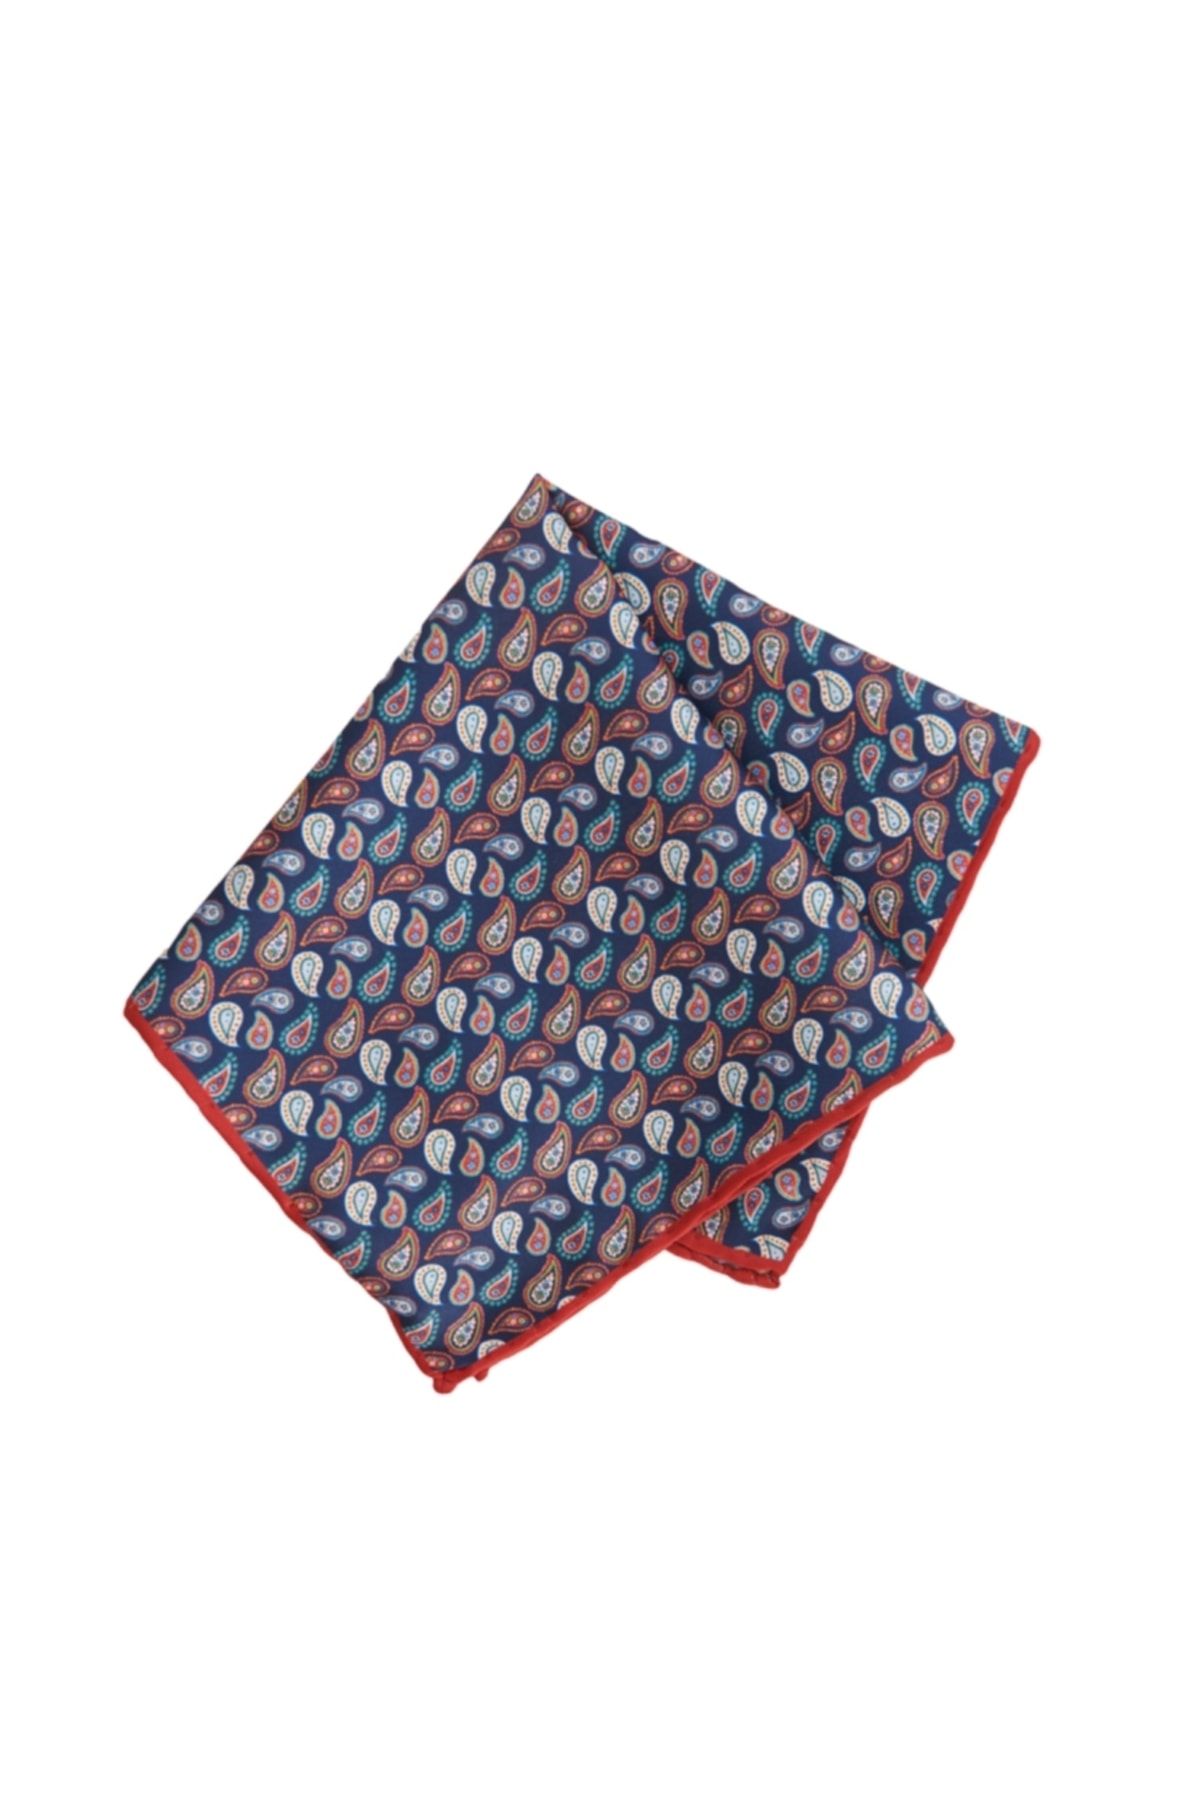 ALTINYILDIZ CLASSICS Men's Navy Blue-Red Patterned Handkerchief